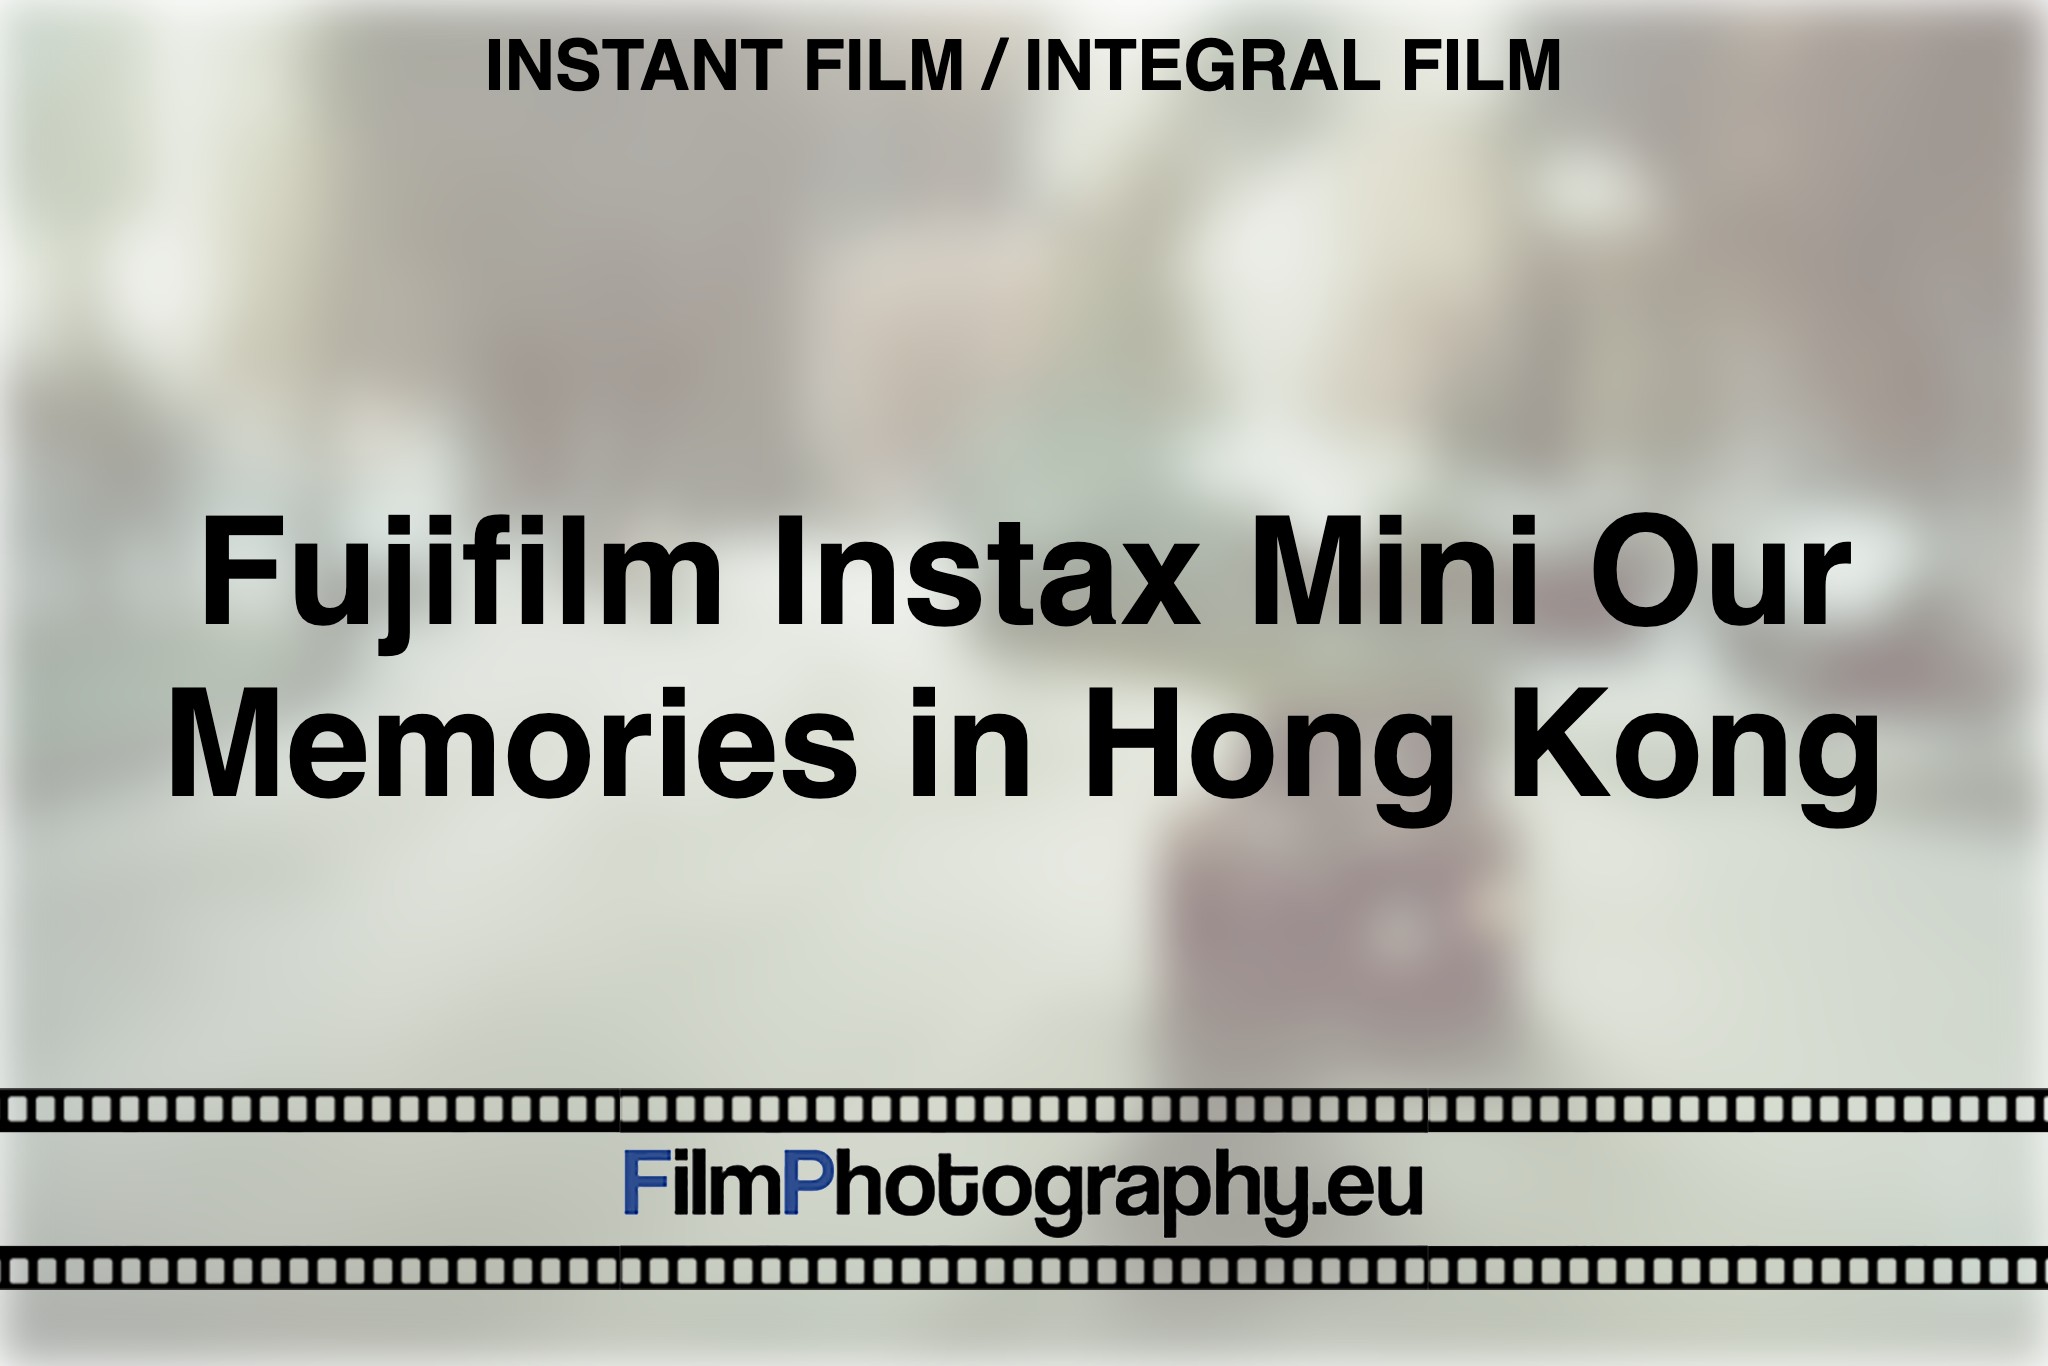 fujifilm-instax-mini-our-memories-in-hong-kong-instant-film-integral-film-bnv